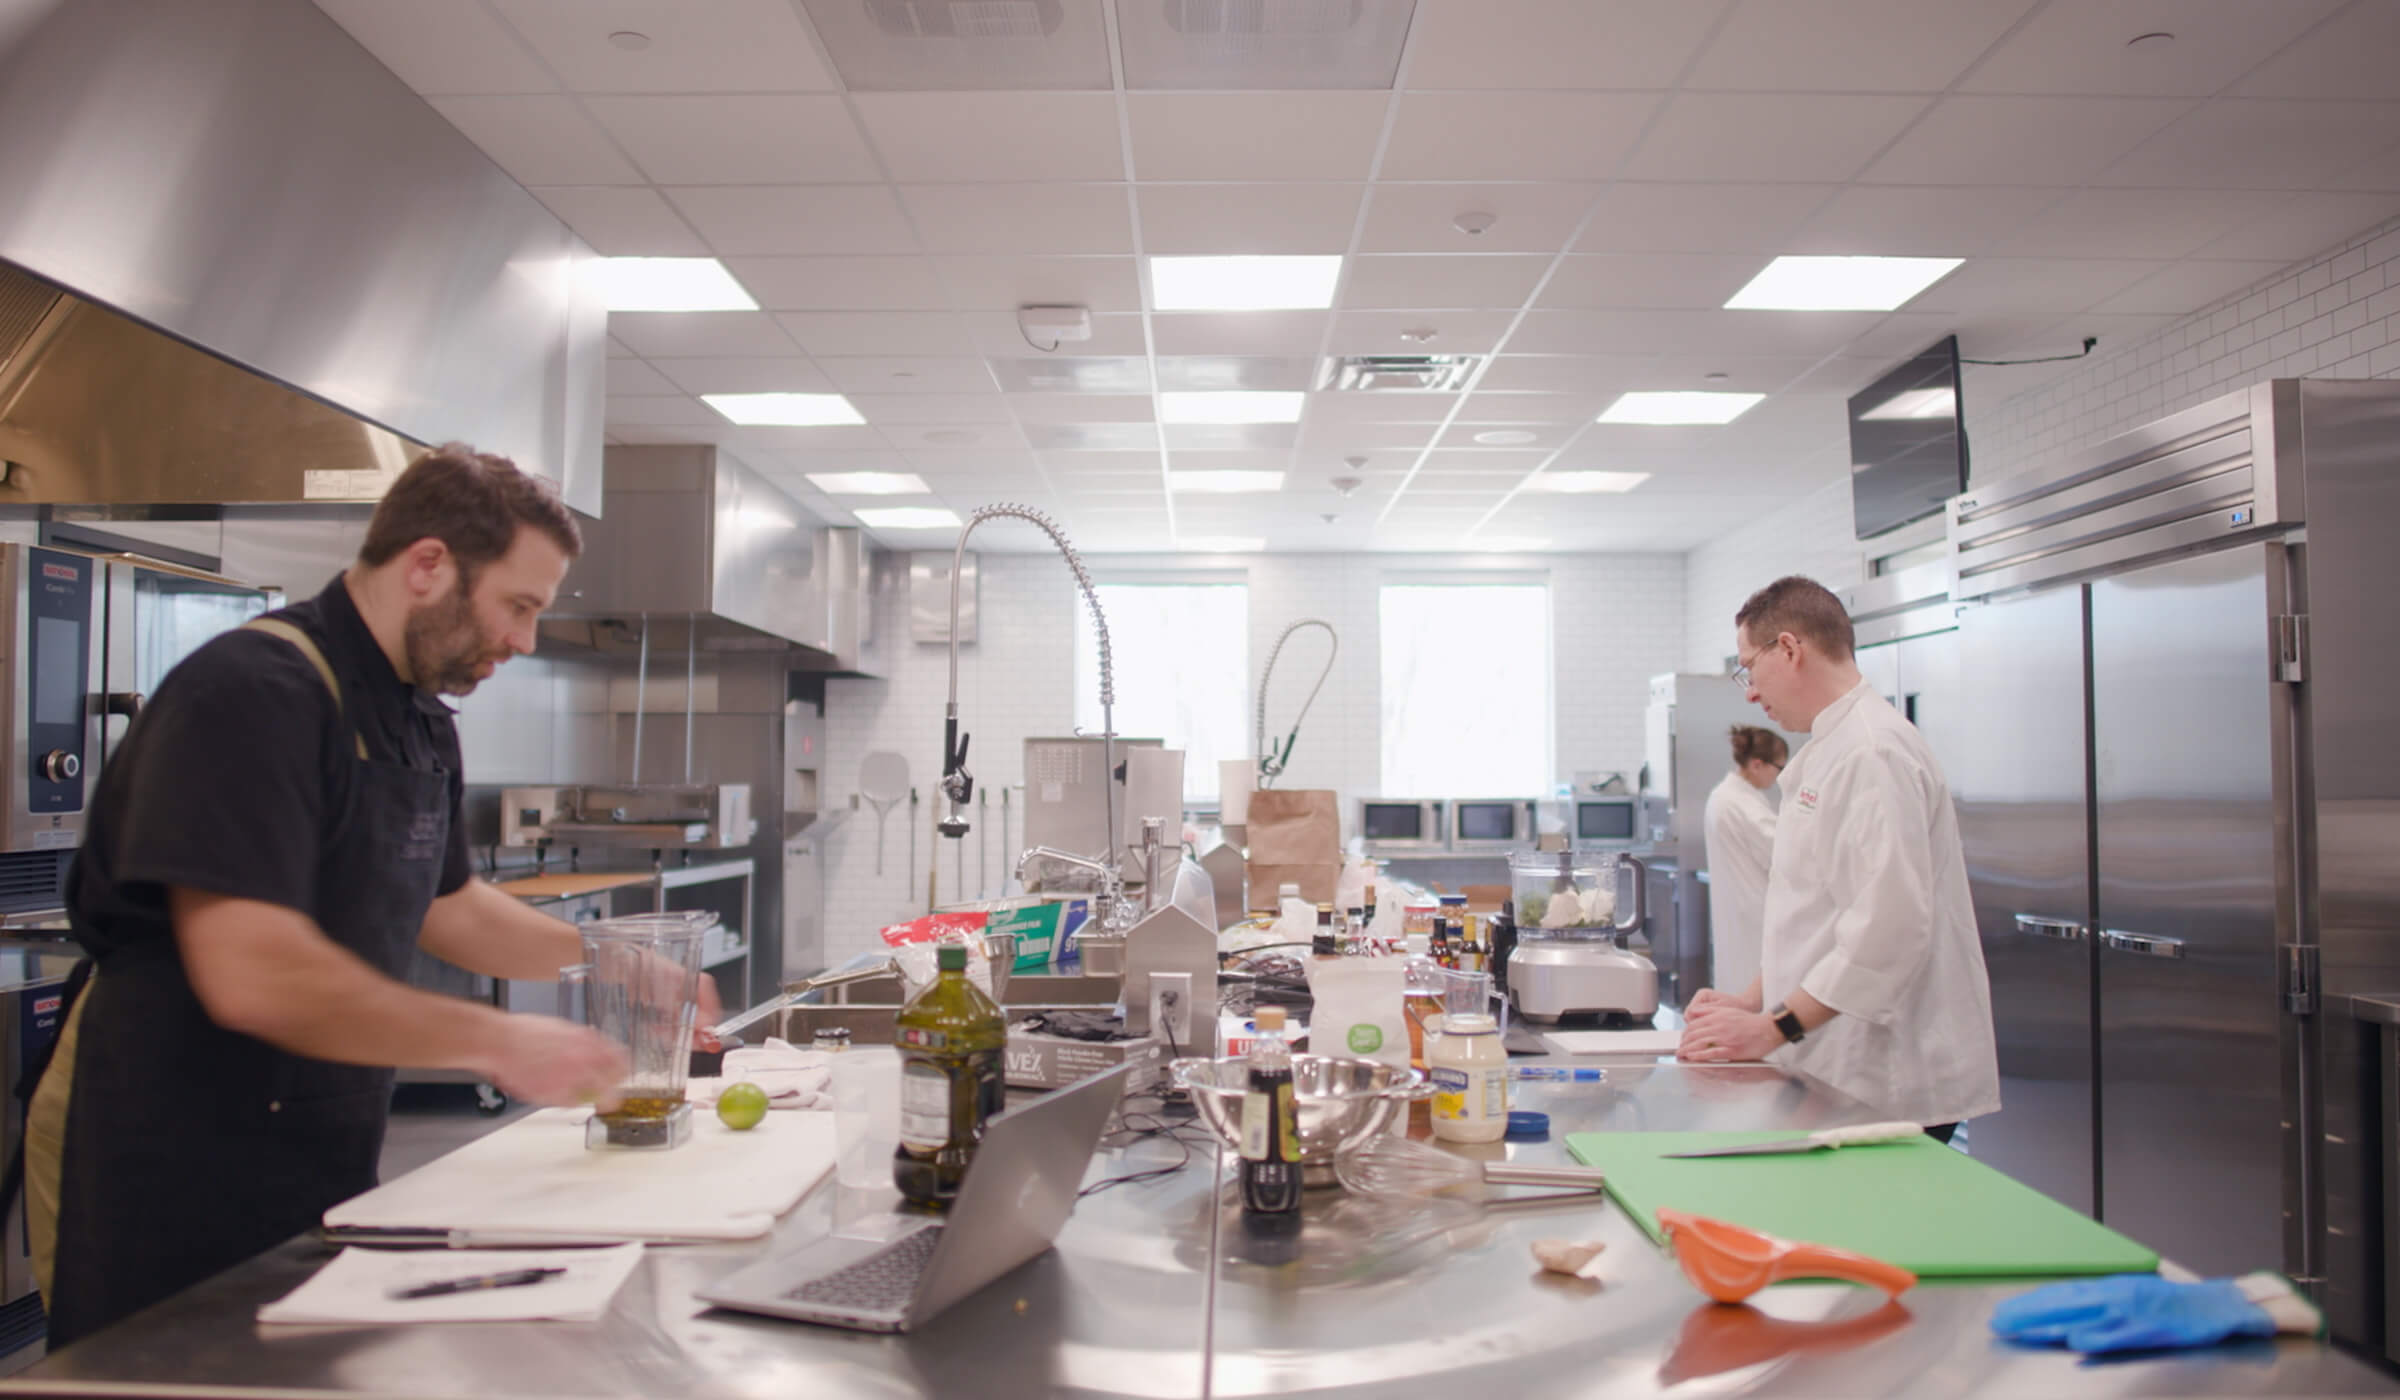 Chefs preparing food in the new Austin innovation center kitchen